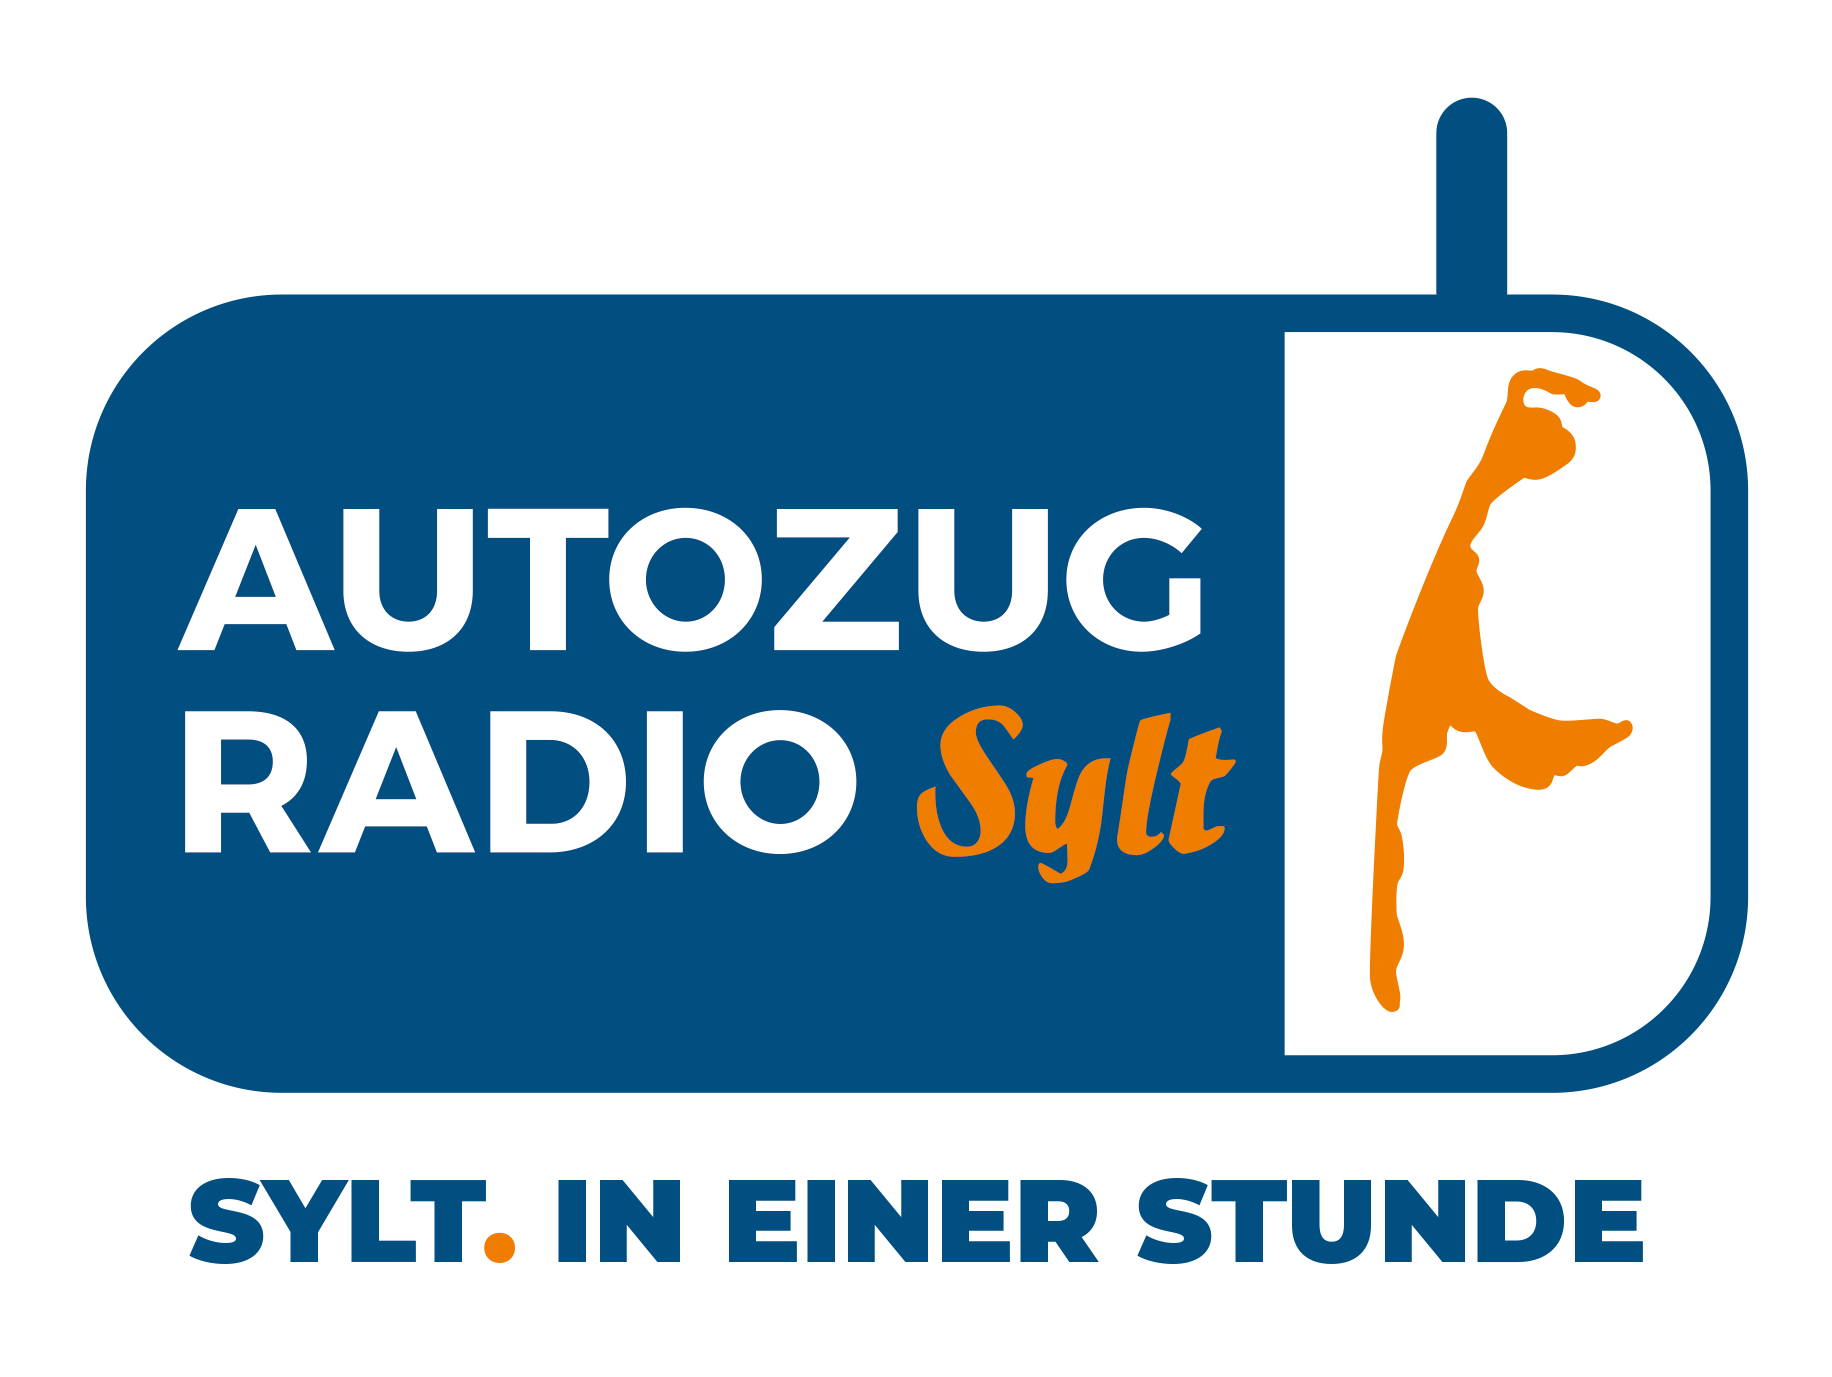 Autozug Radio Sylt Logo